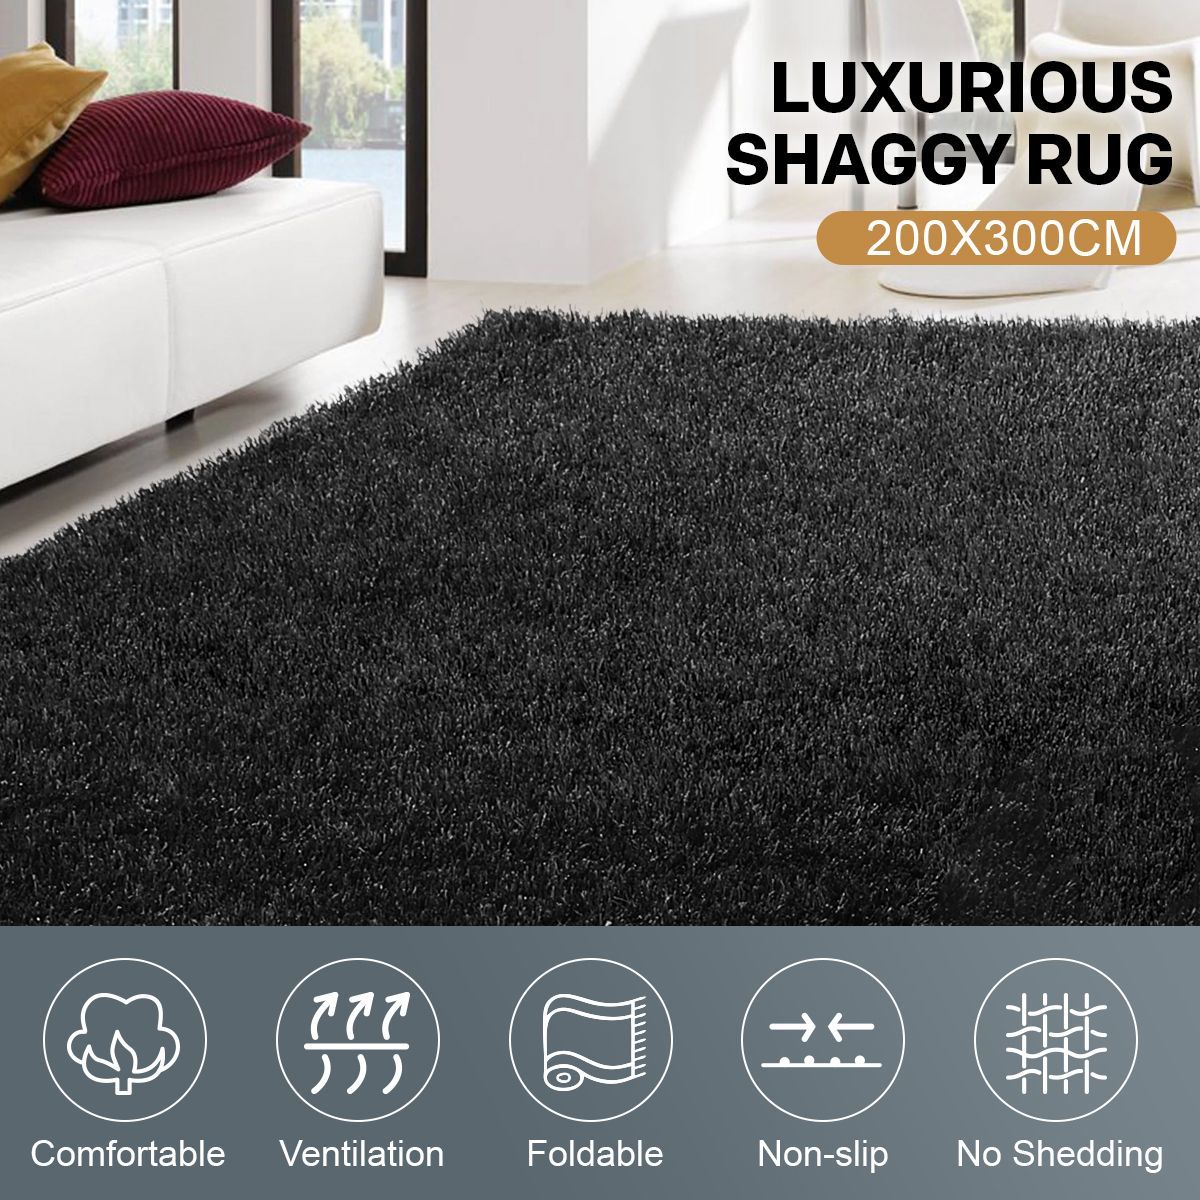 200x300cm Fluffy Shaggy Rug Large Shag Area Soft Dark Grey Carpet Home Bedroom Anti-Slip Floor Mat